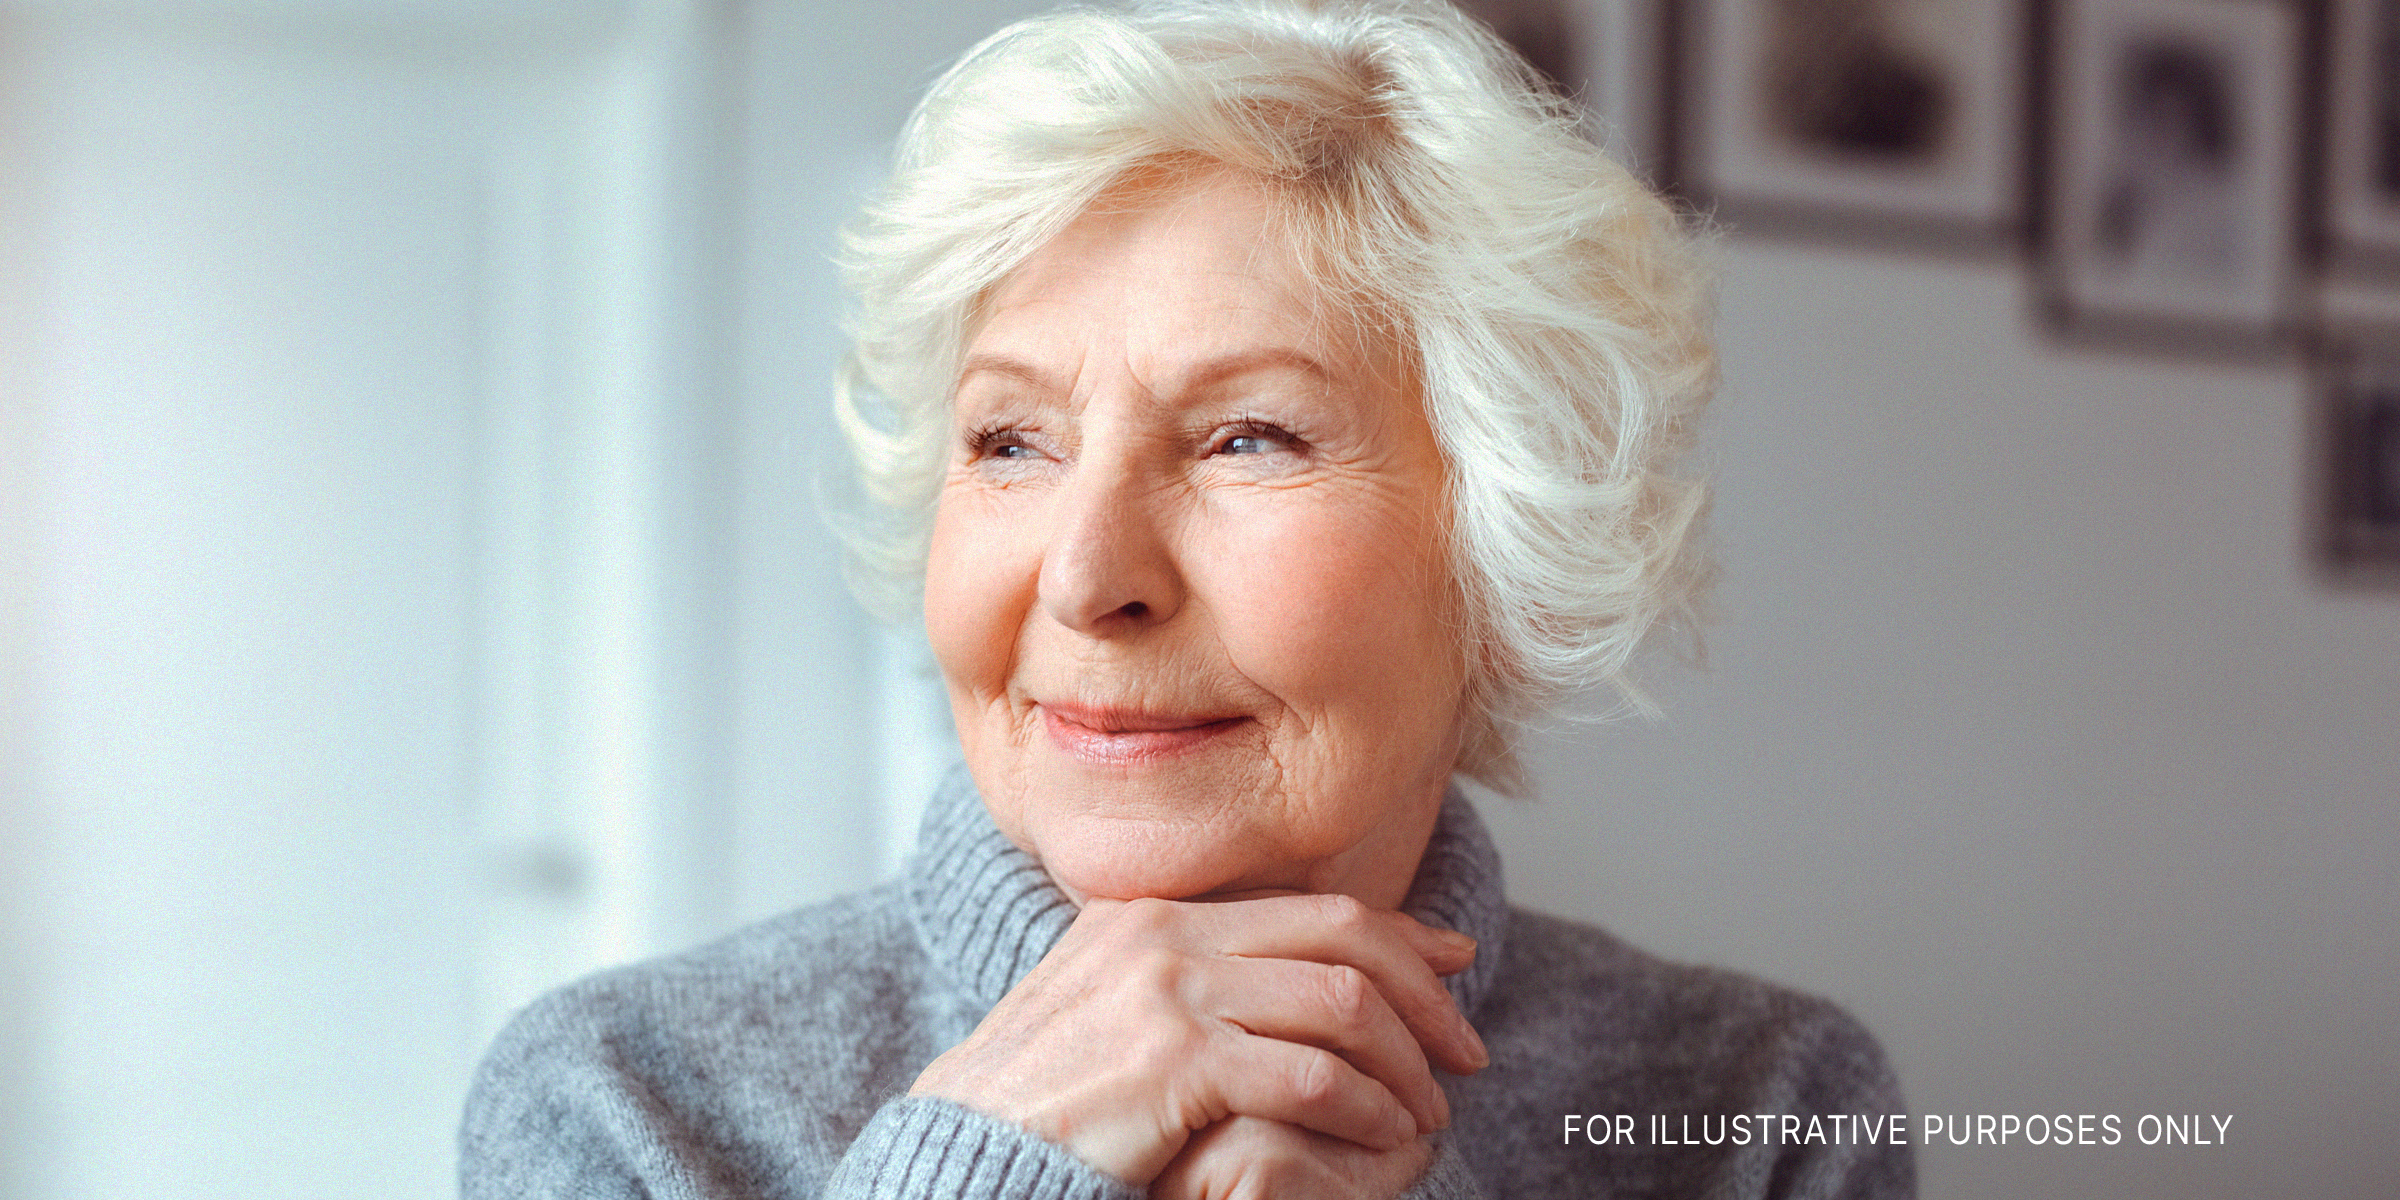 Lächelnde ältere Frau | Quelle: Shutterstock